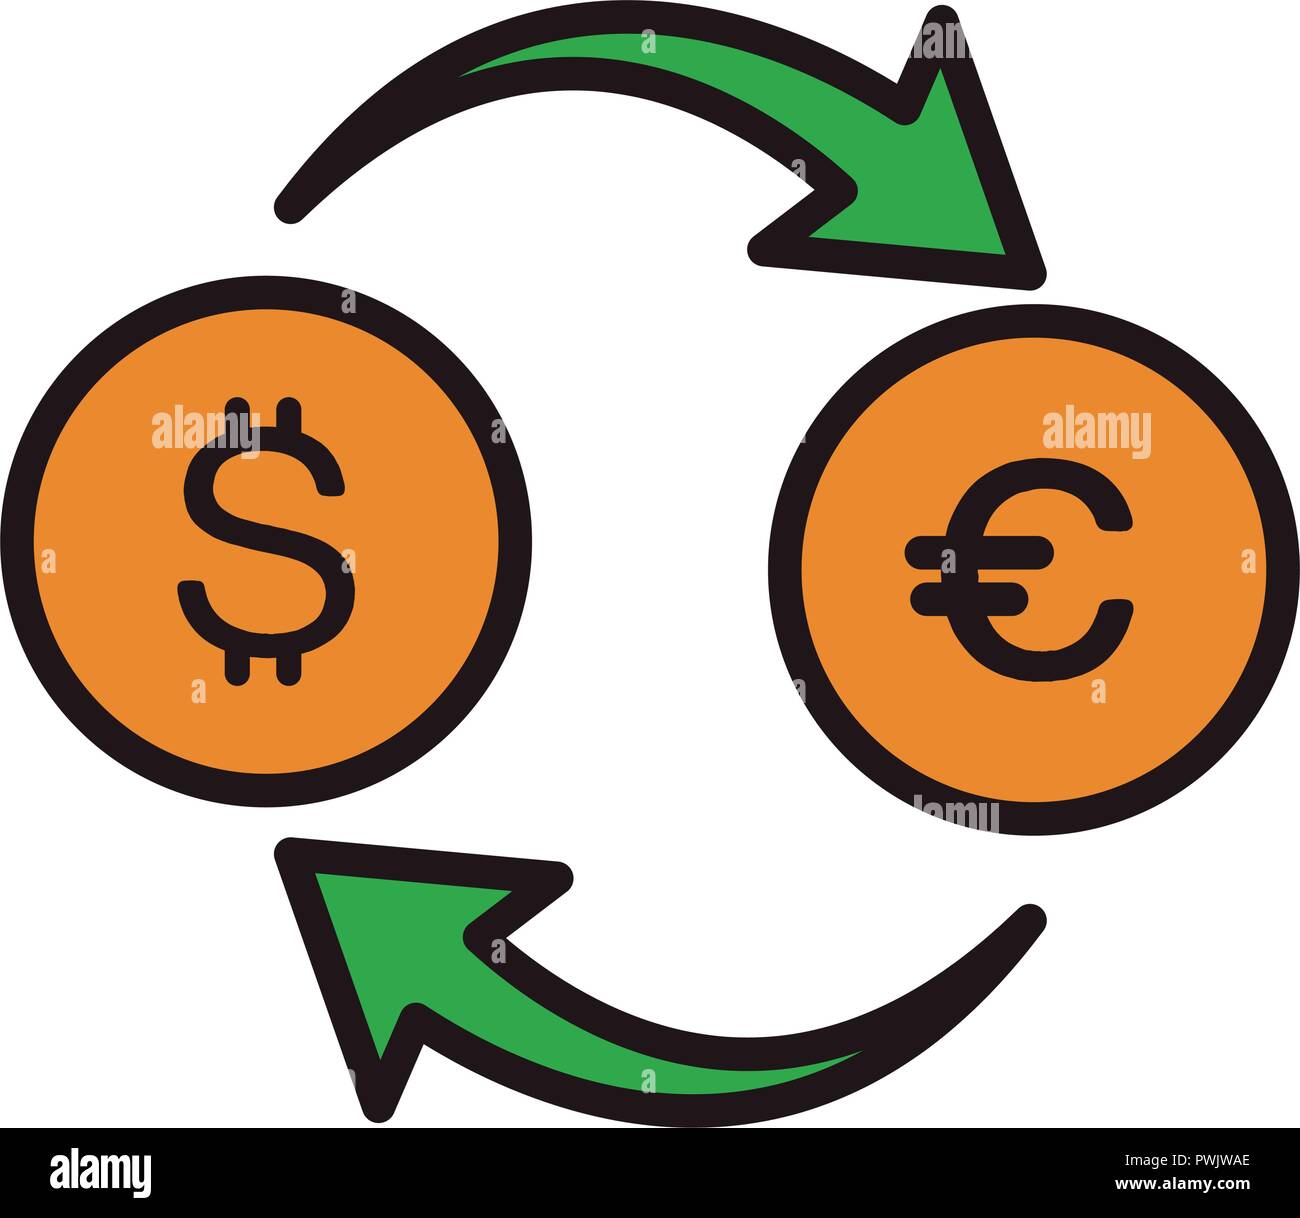 Dollaro ed Euro simbolo exchange illustrazione vettoriale graphic design Illustrazione Vettoriale